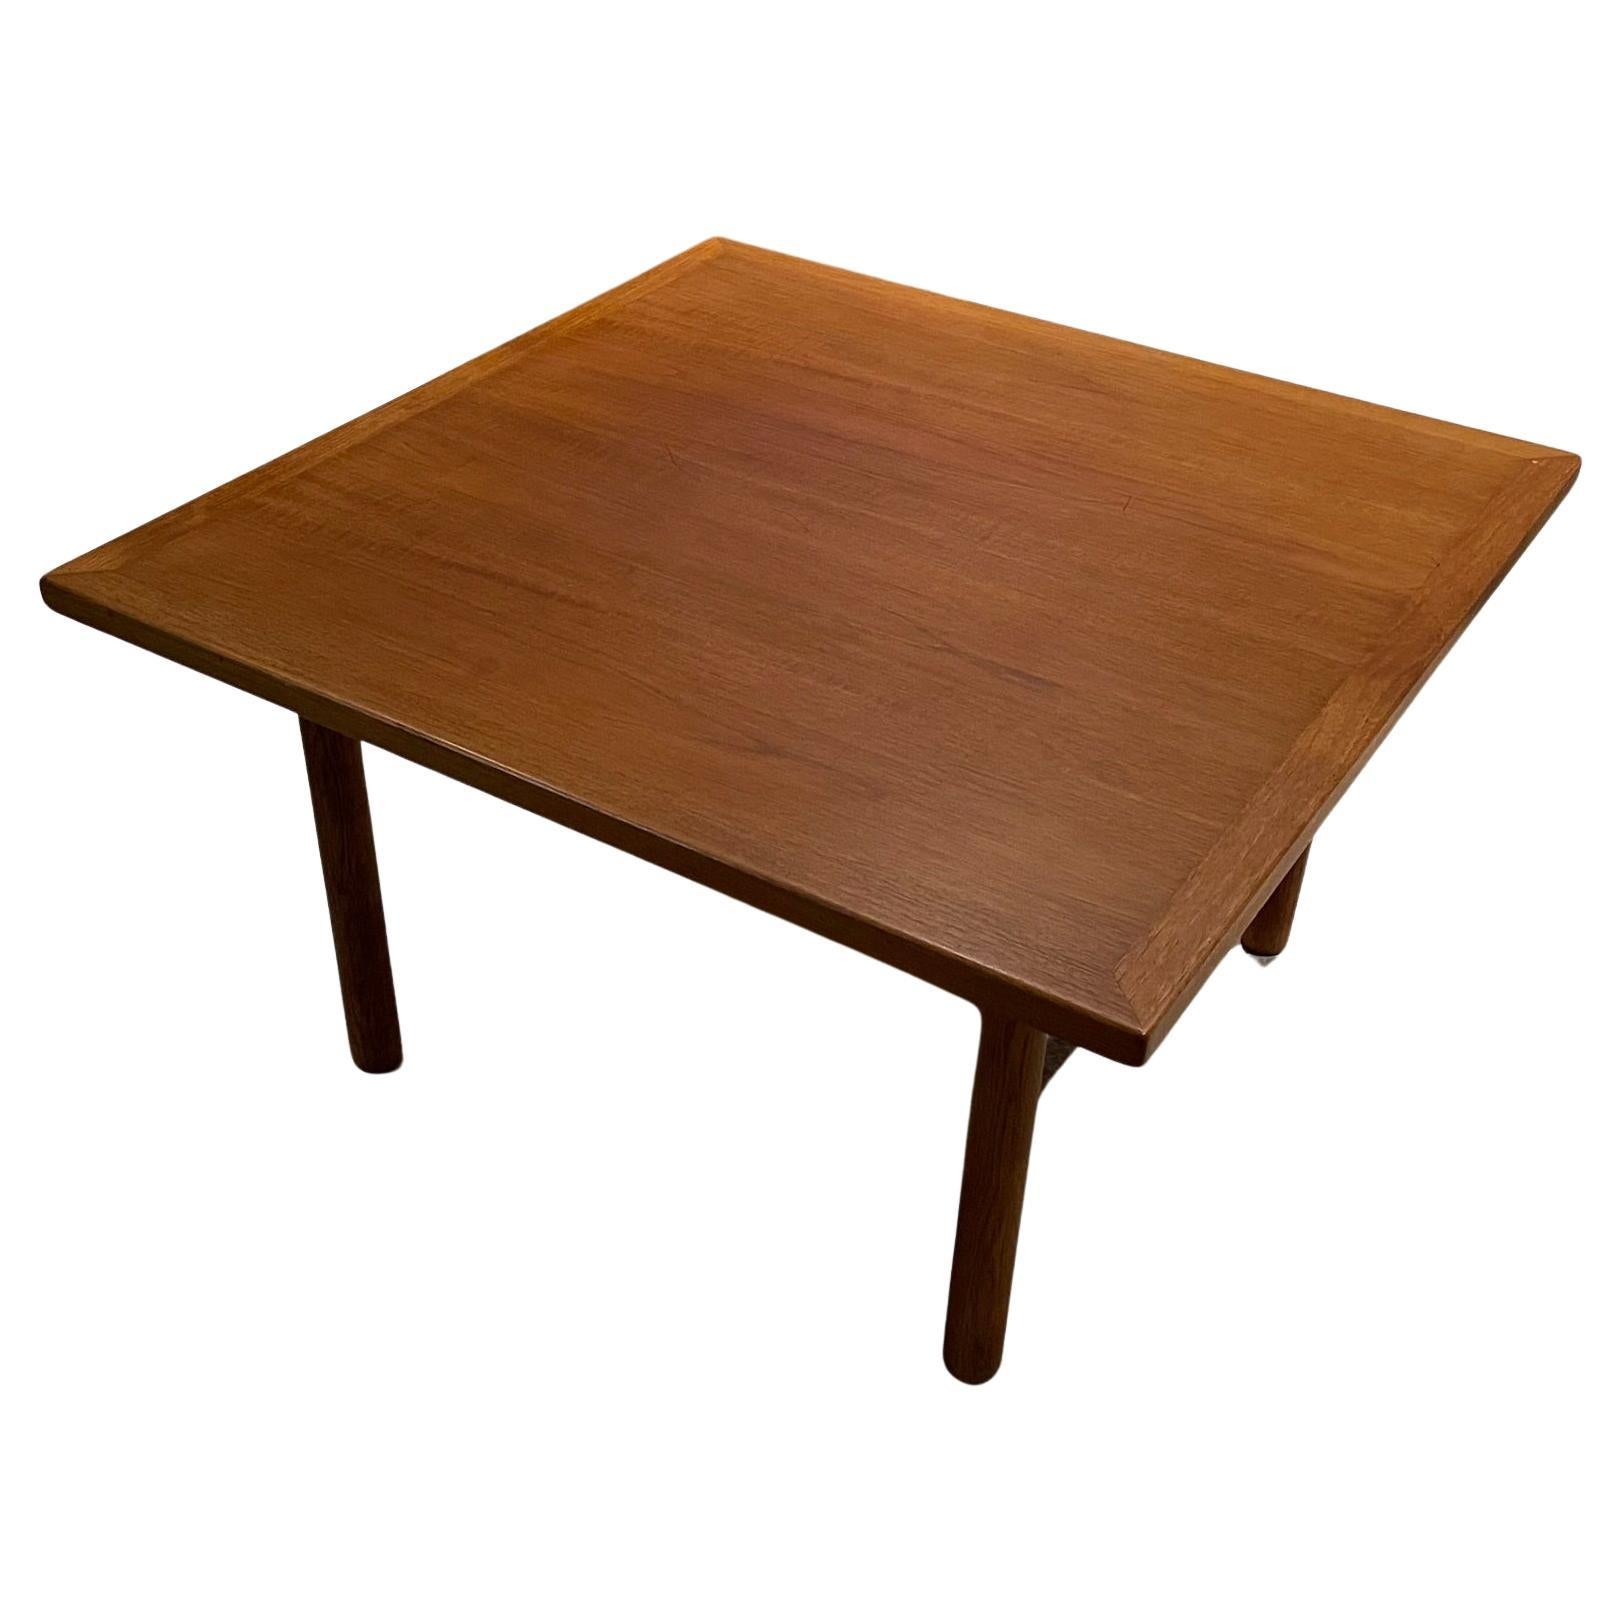  Hans Wegner Teak and Oak Wood Coffee Table Classic Danish Modern 1960s